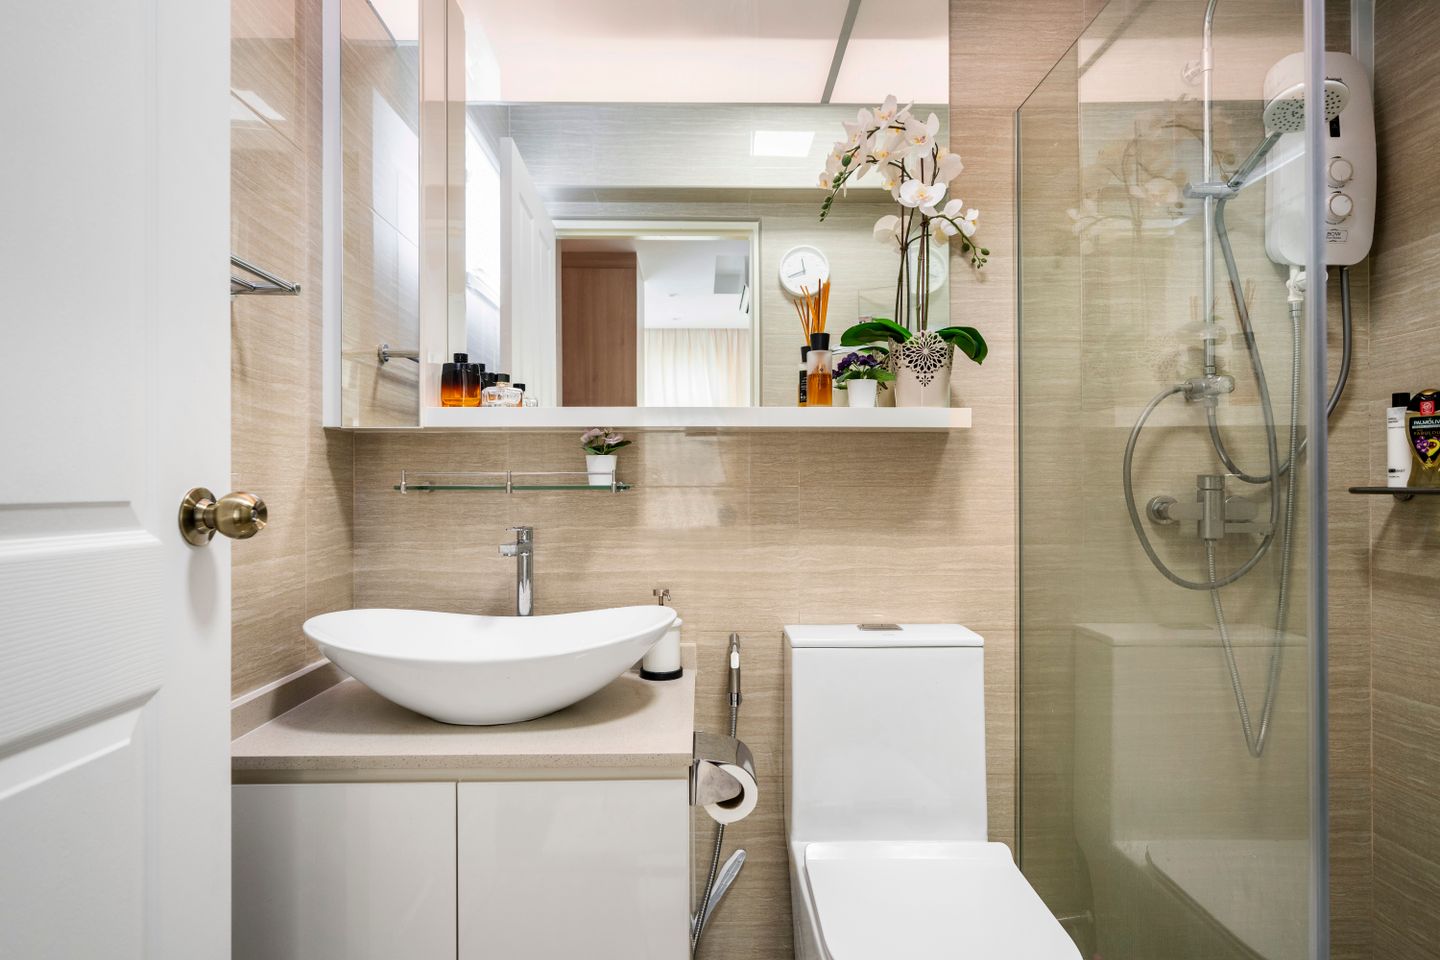 Compact Bathroom With A Contemporary Design - Livspace